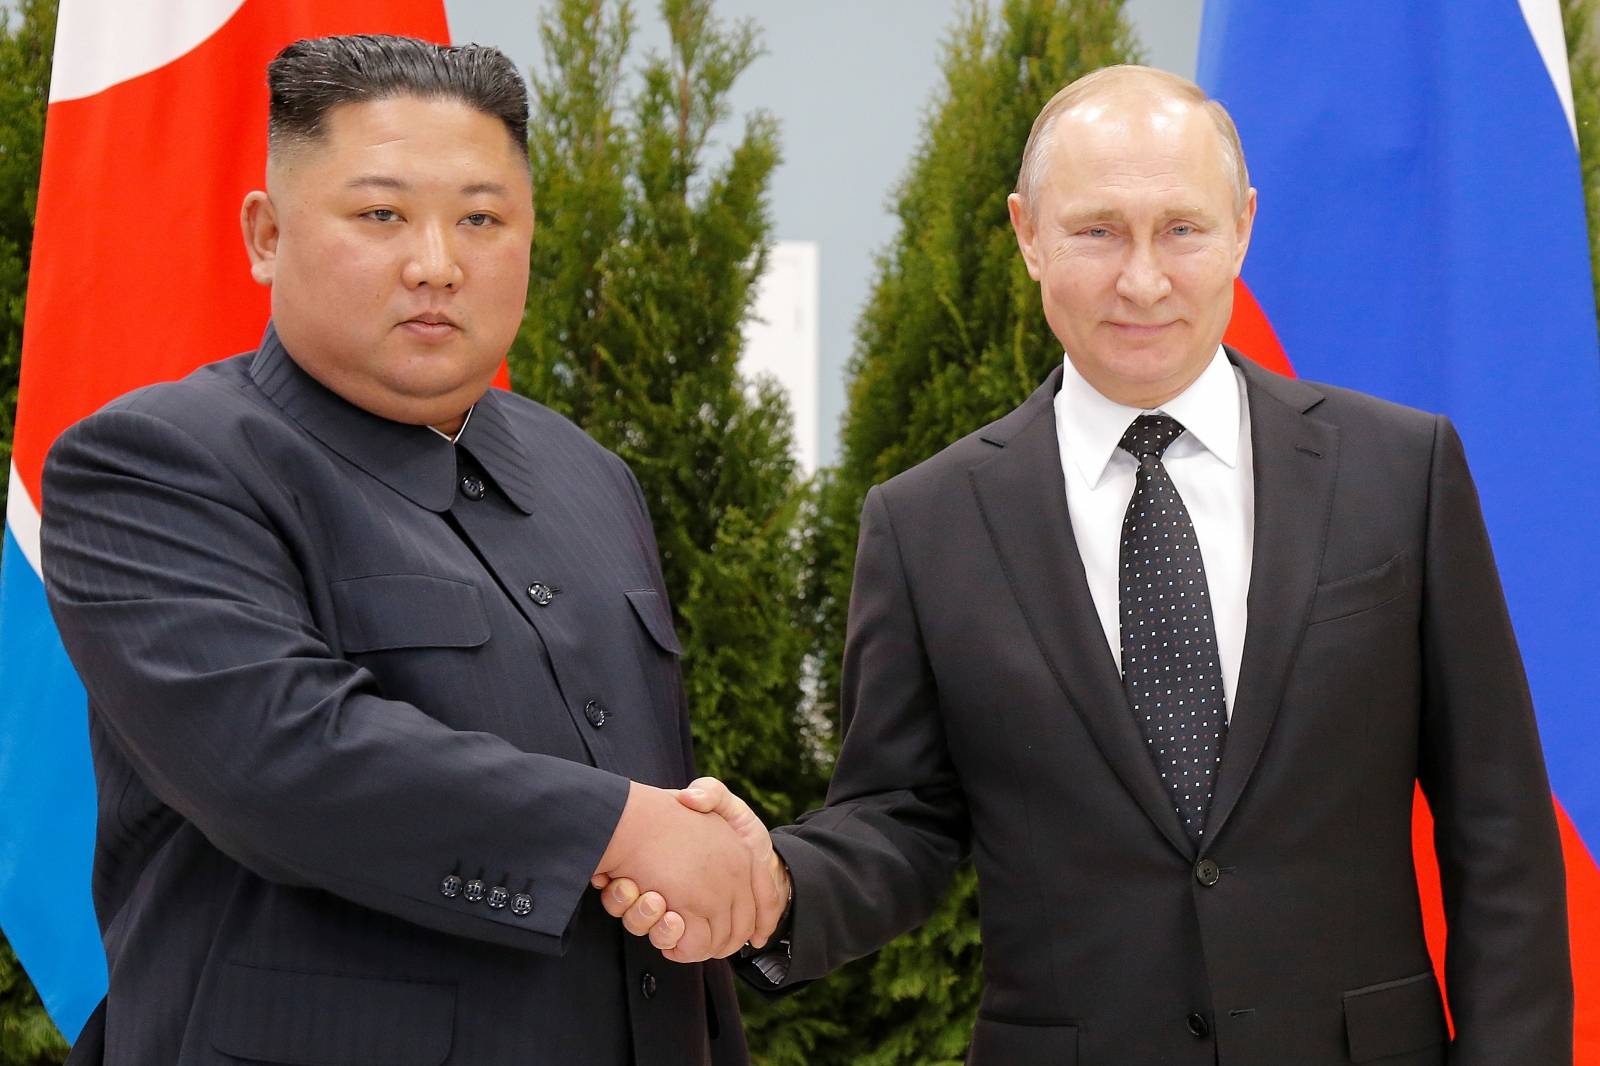 Russian President Vladimir Putin and North Korea's leader Kim Jong Un shake hands during their meeting in Vladivostok